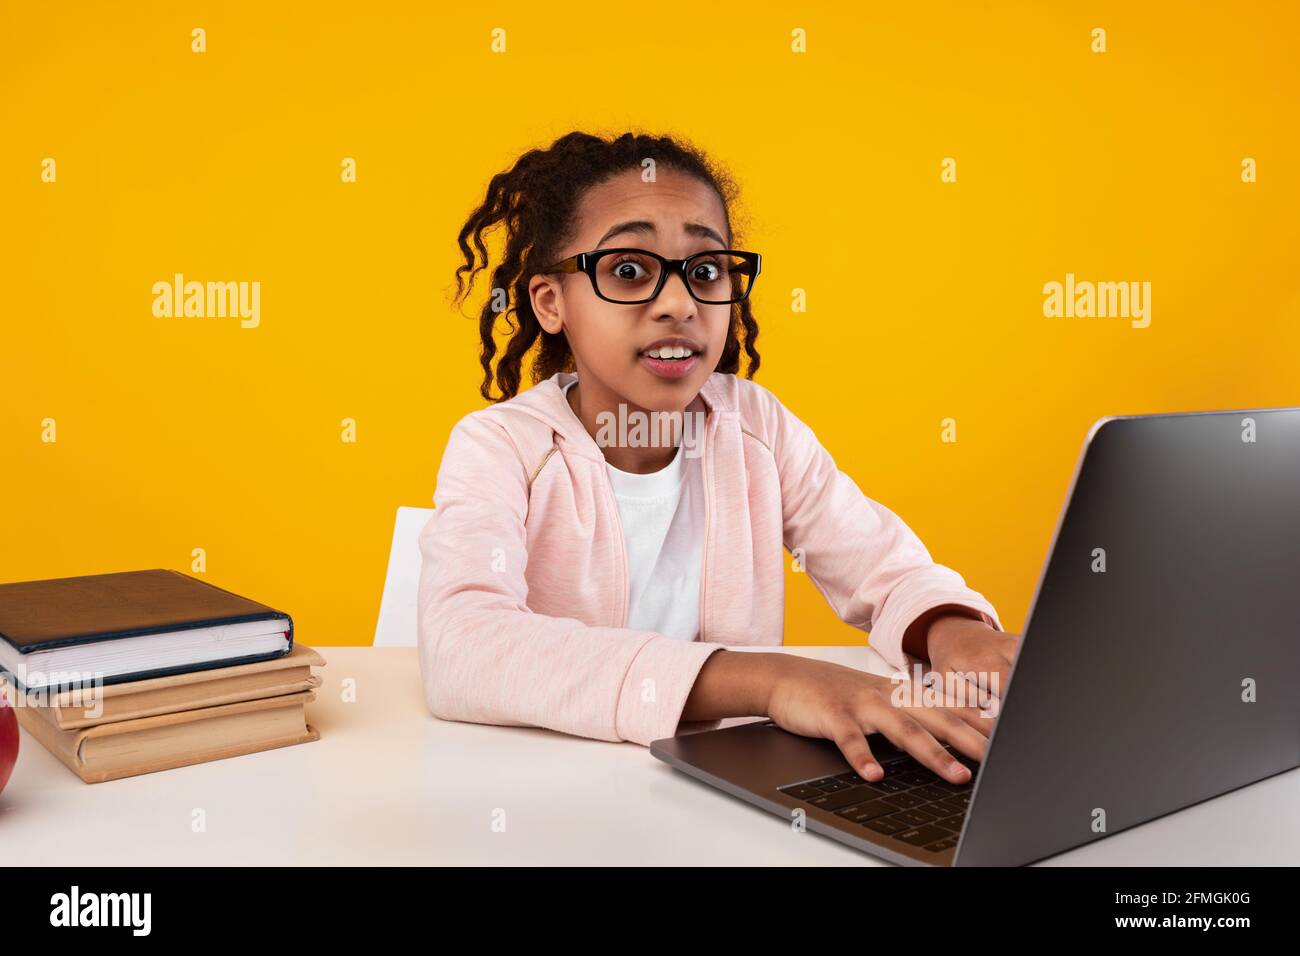 Shocked black girl using laptop looking at camera Stock Photo